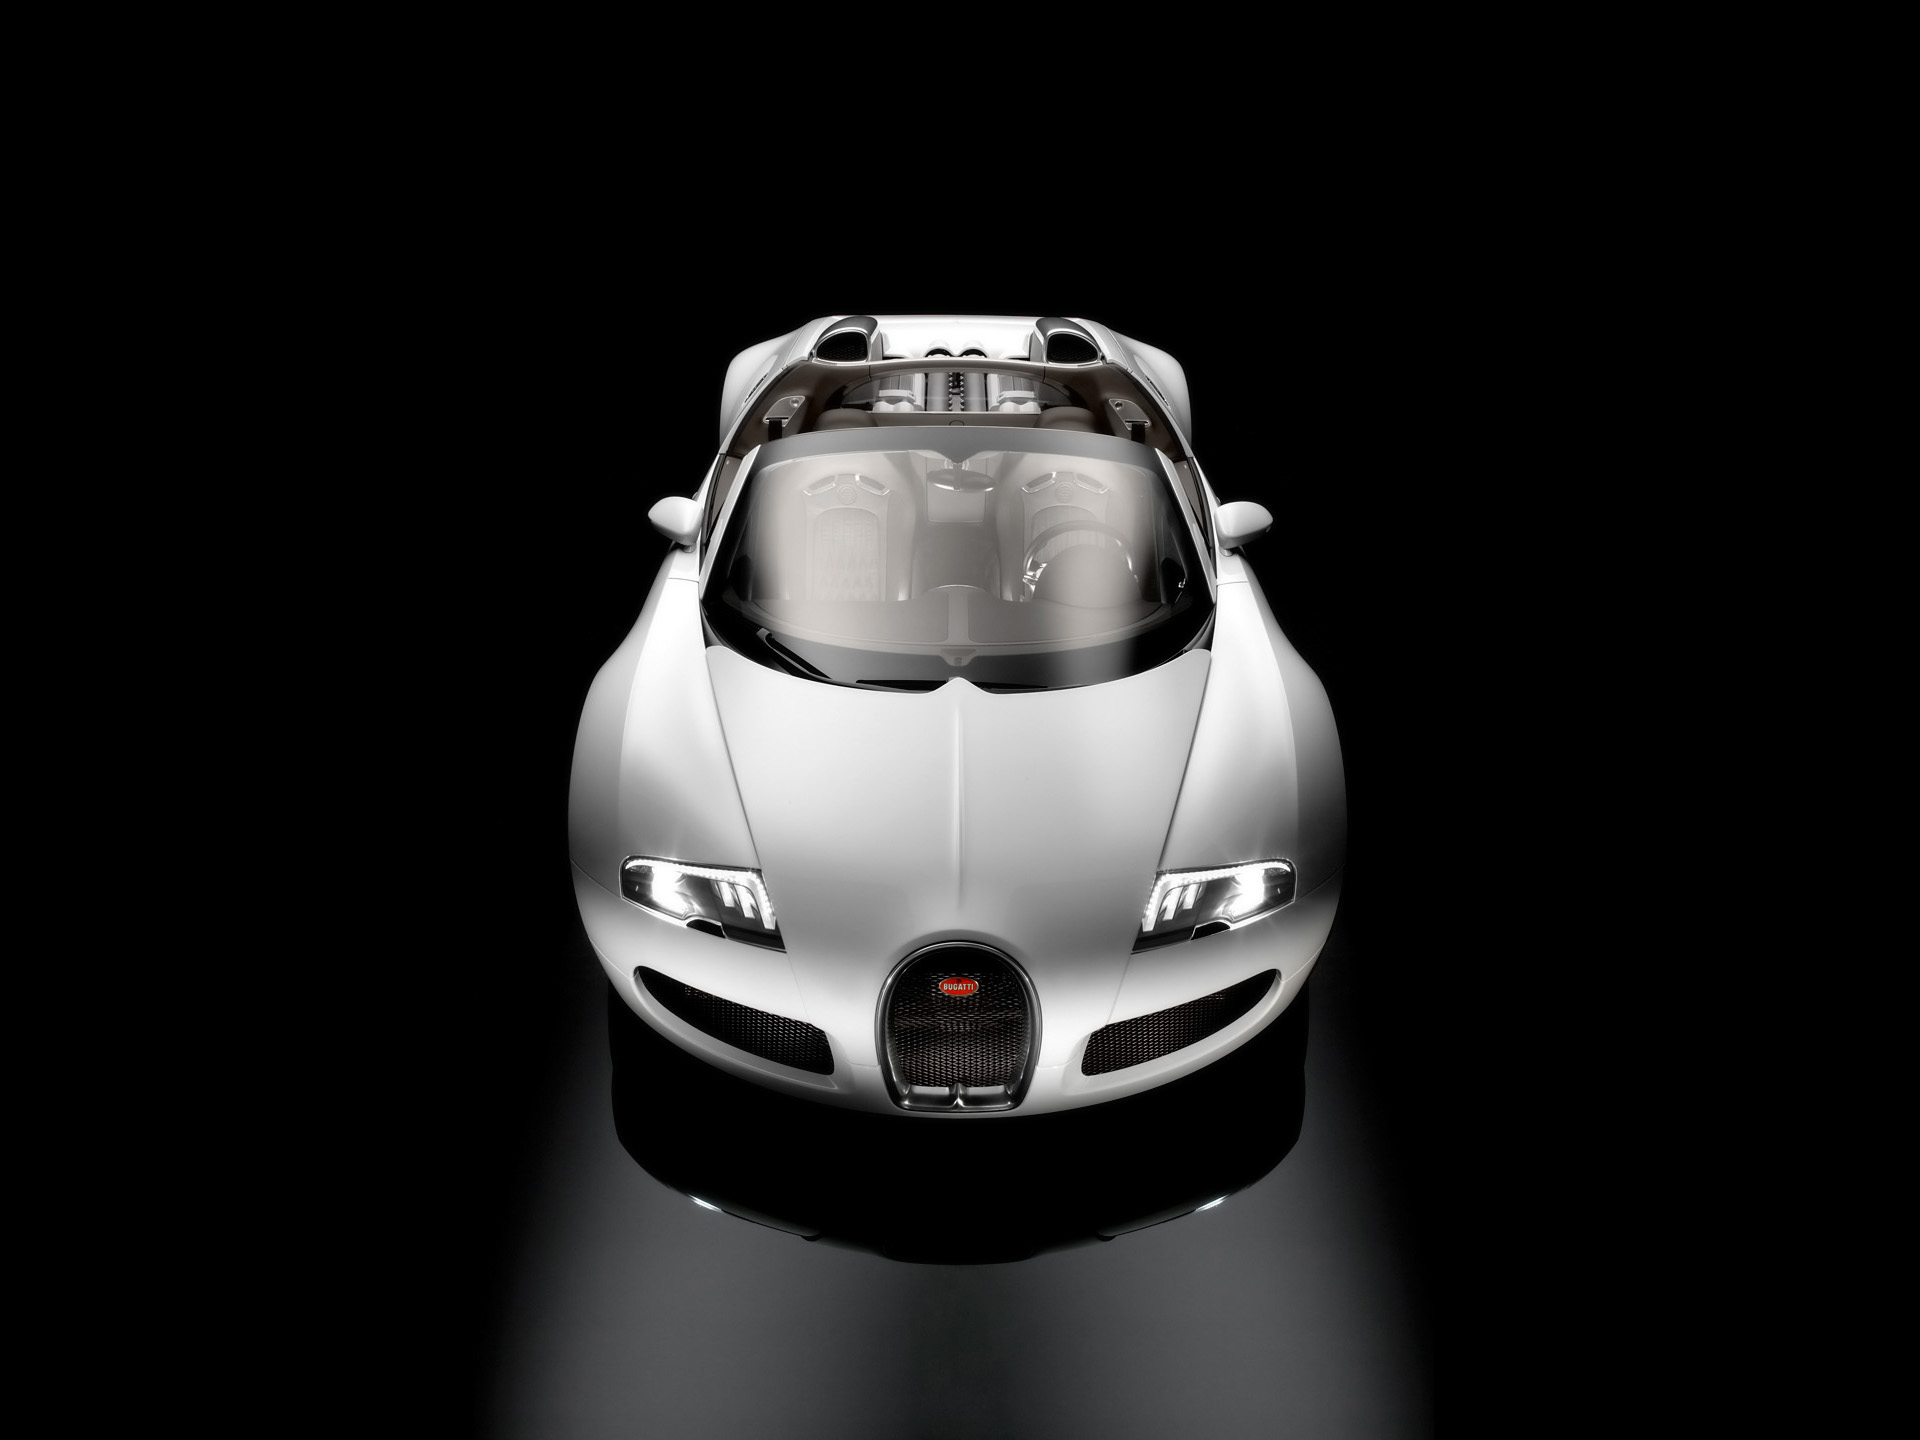 329137 descargar imagen vehículos, bugatti veyron 16 4 gran deporte, bugatti: fondos de pantalla y protectores de pantalla gratis